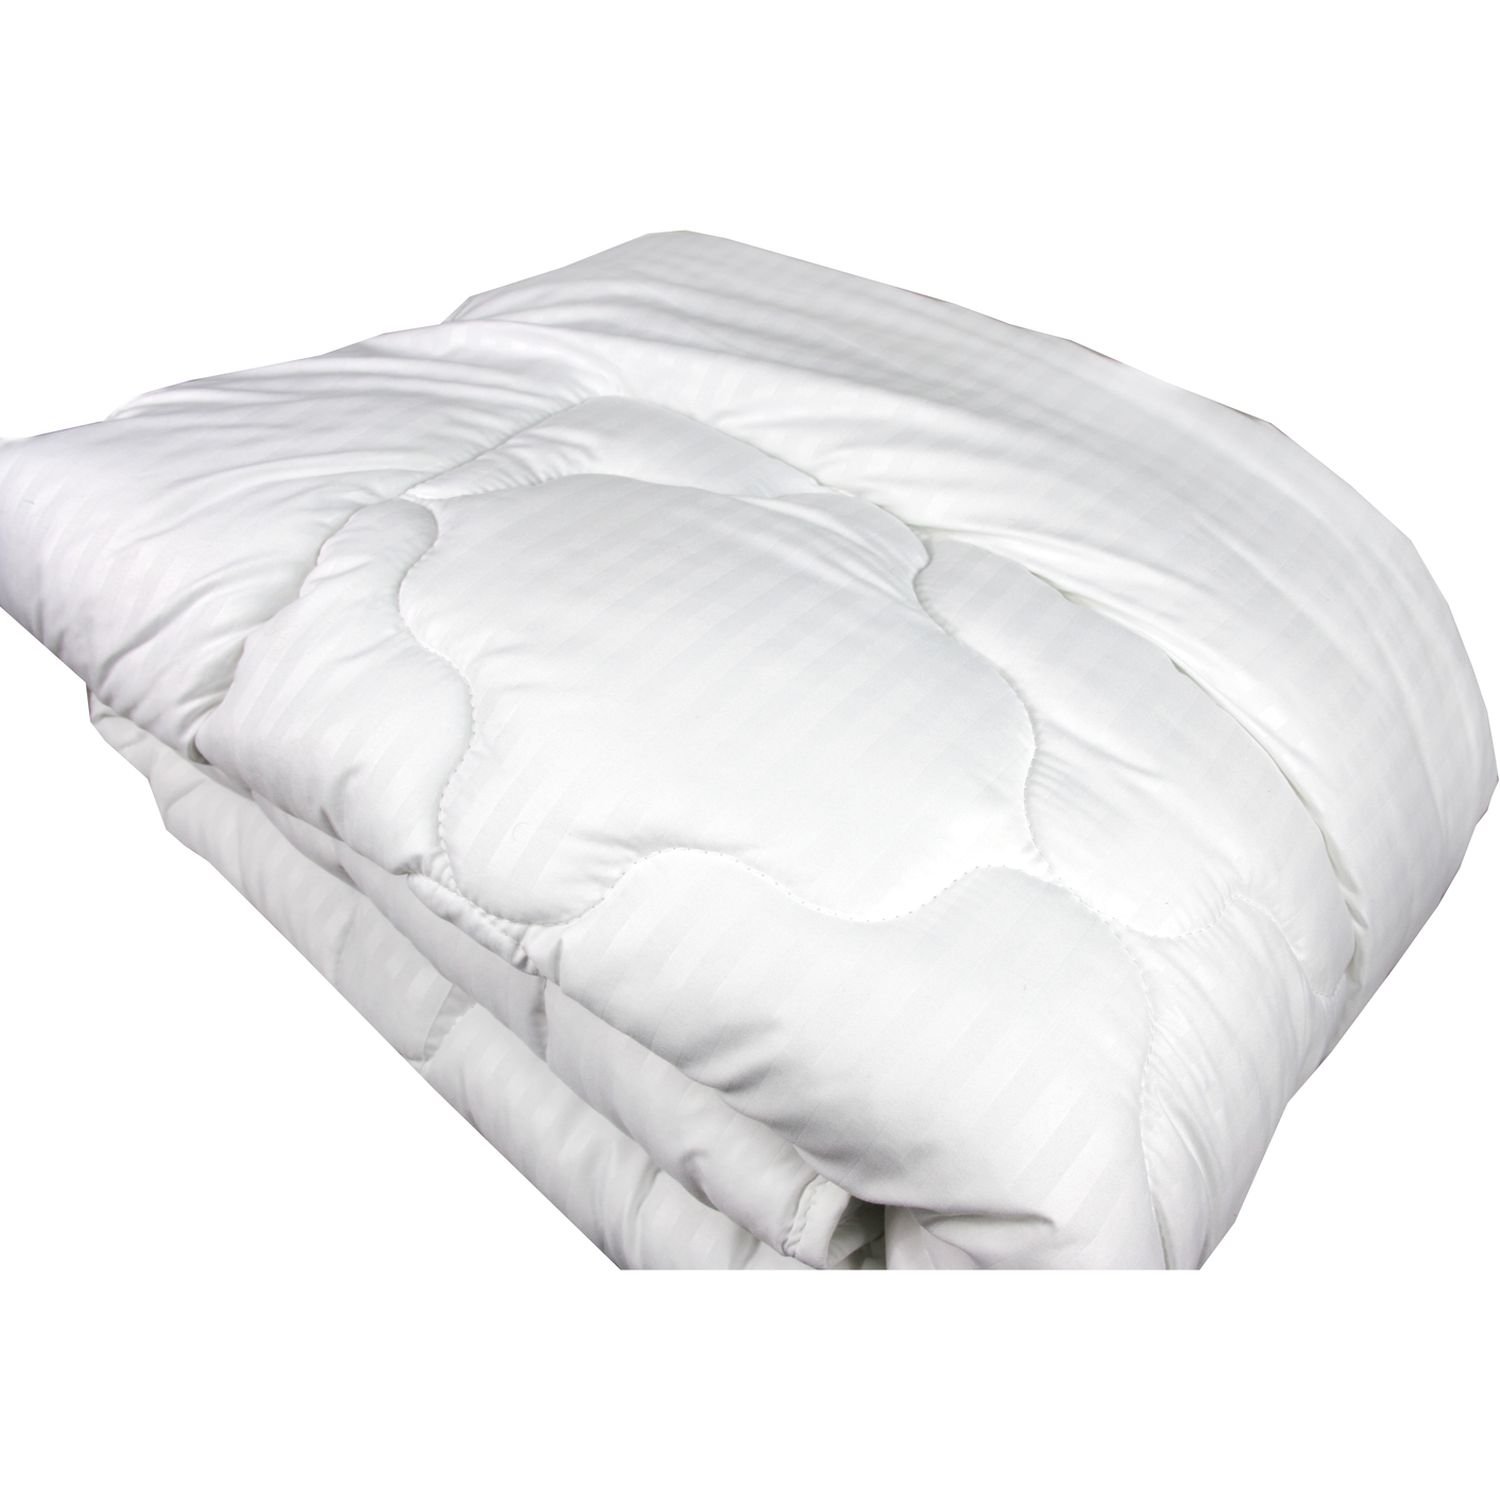 Одеяло LightHouse Swan Mf Stripe Лебединый пух 210х140 см белое (602183) - фото 2